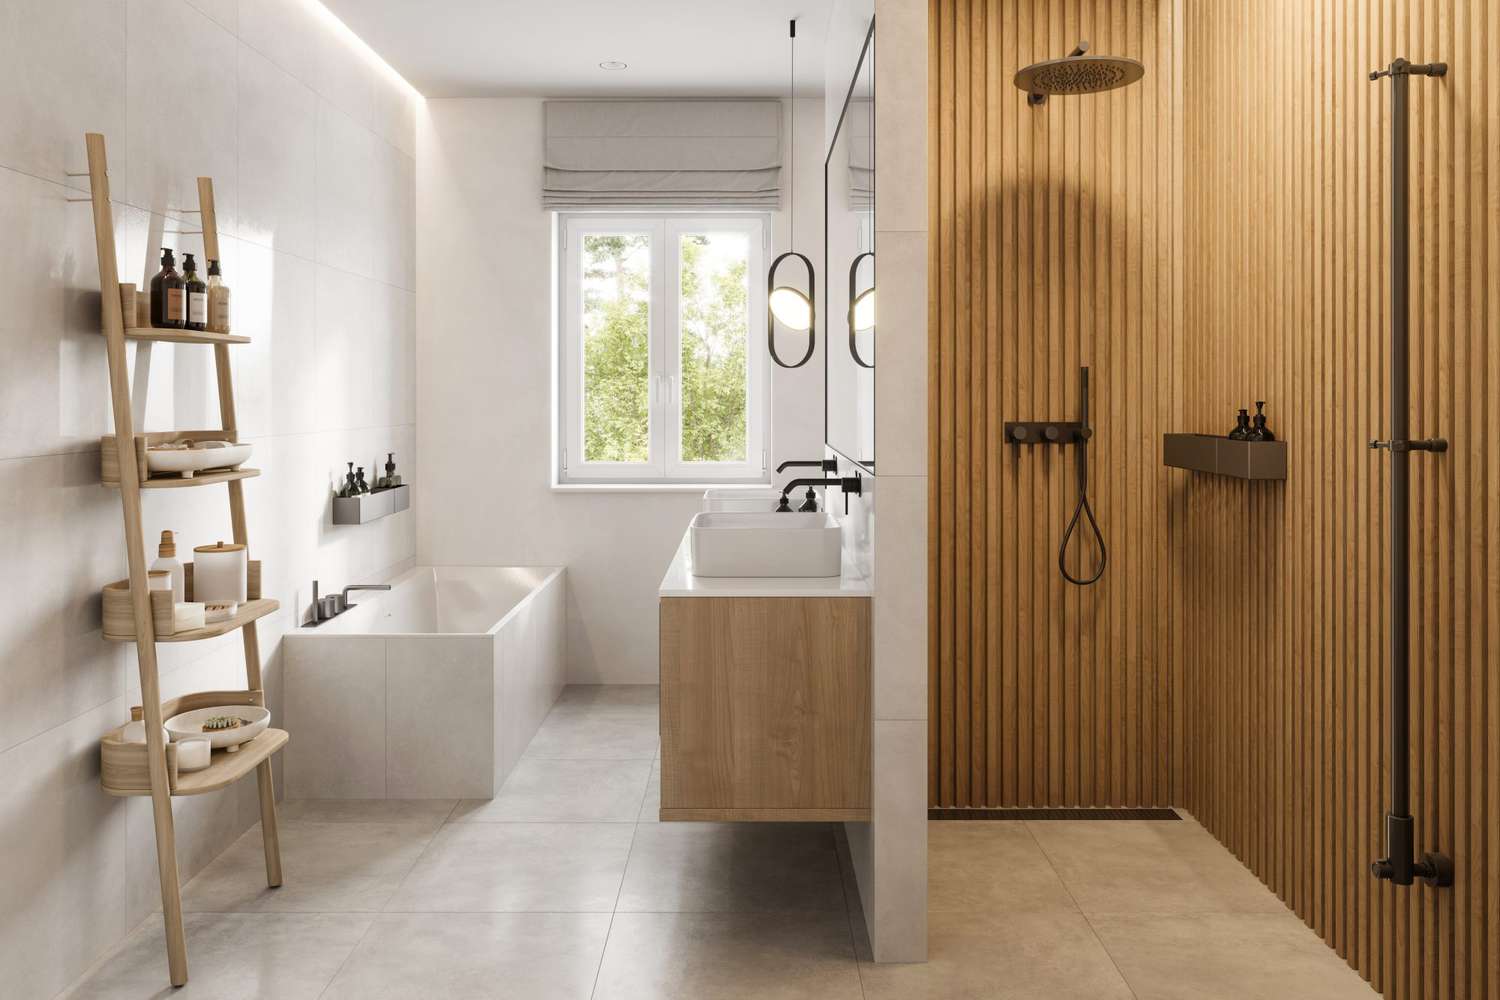 Luxurious spa bathroom with tub and rain shower